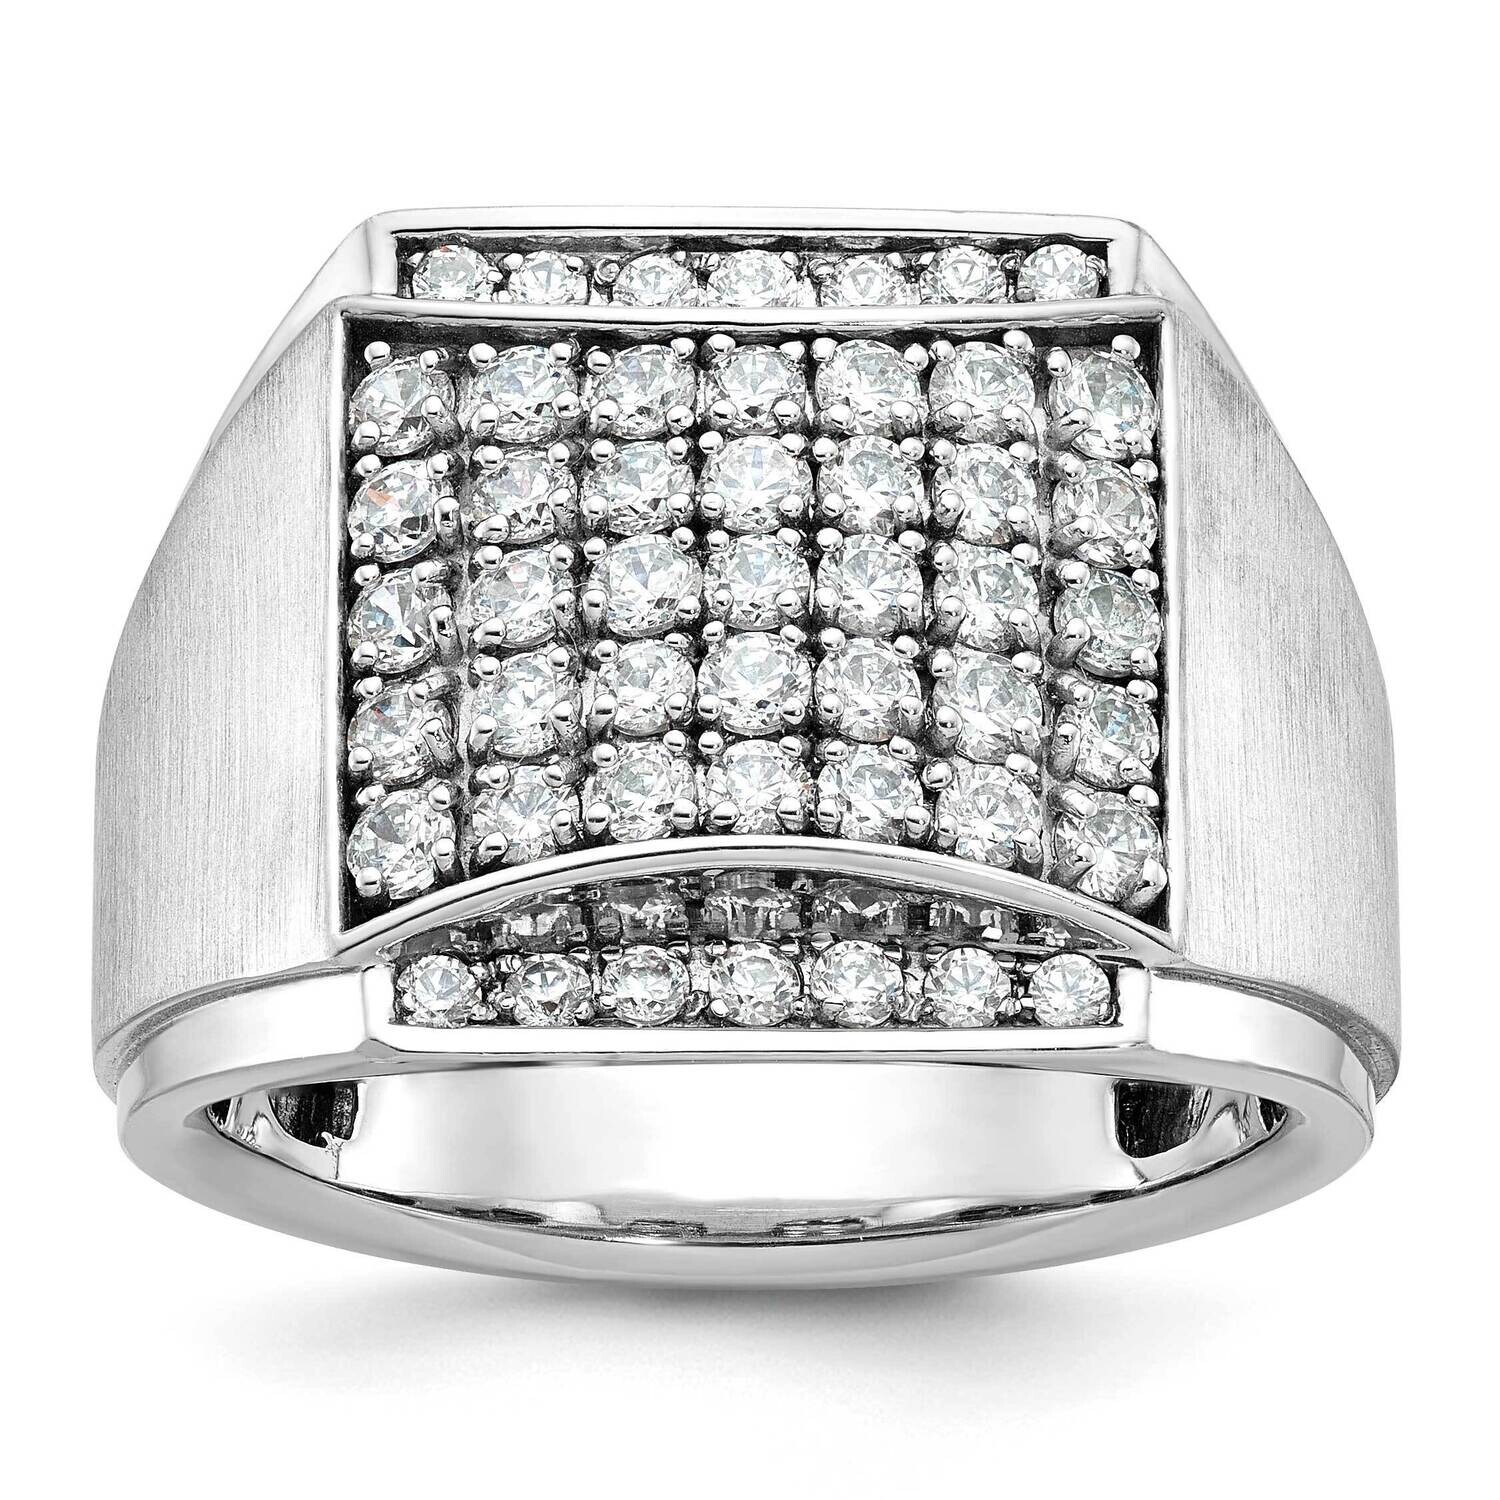 Ibgoodman Men's Polished Satin 1 1/5 Carat Aa Quality Diamond Cluster Ring 14k White Gold B59141-4WAA